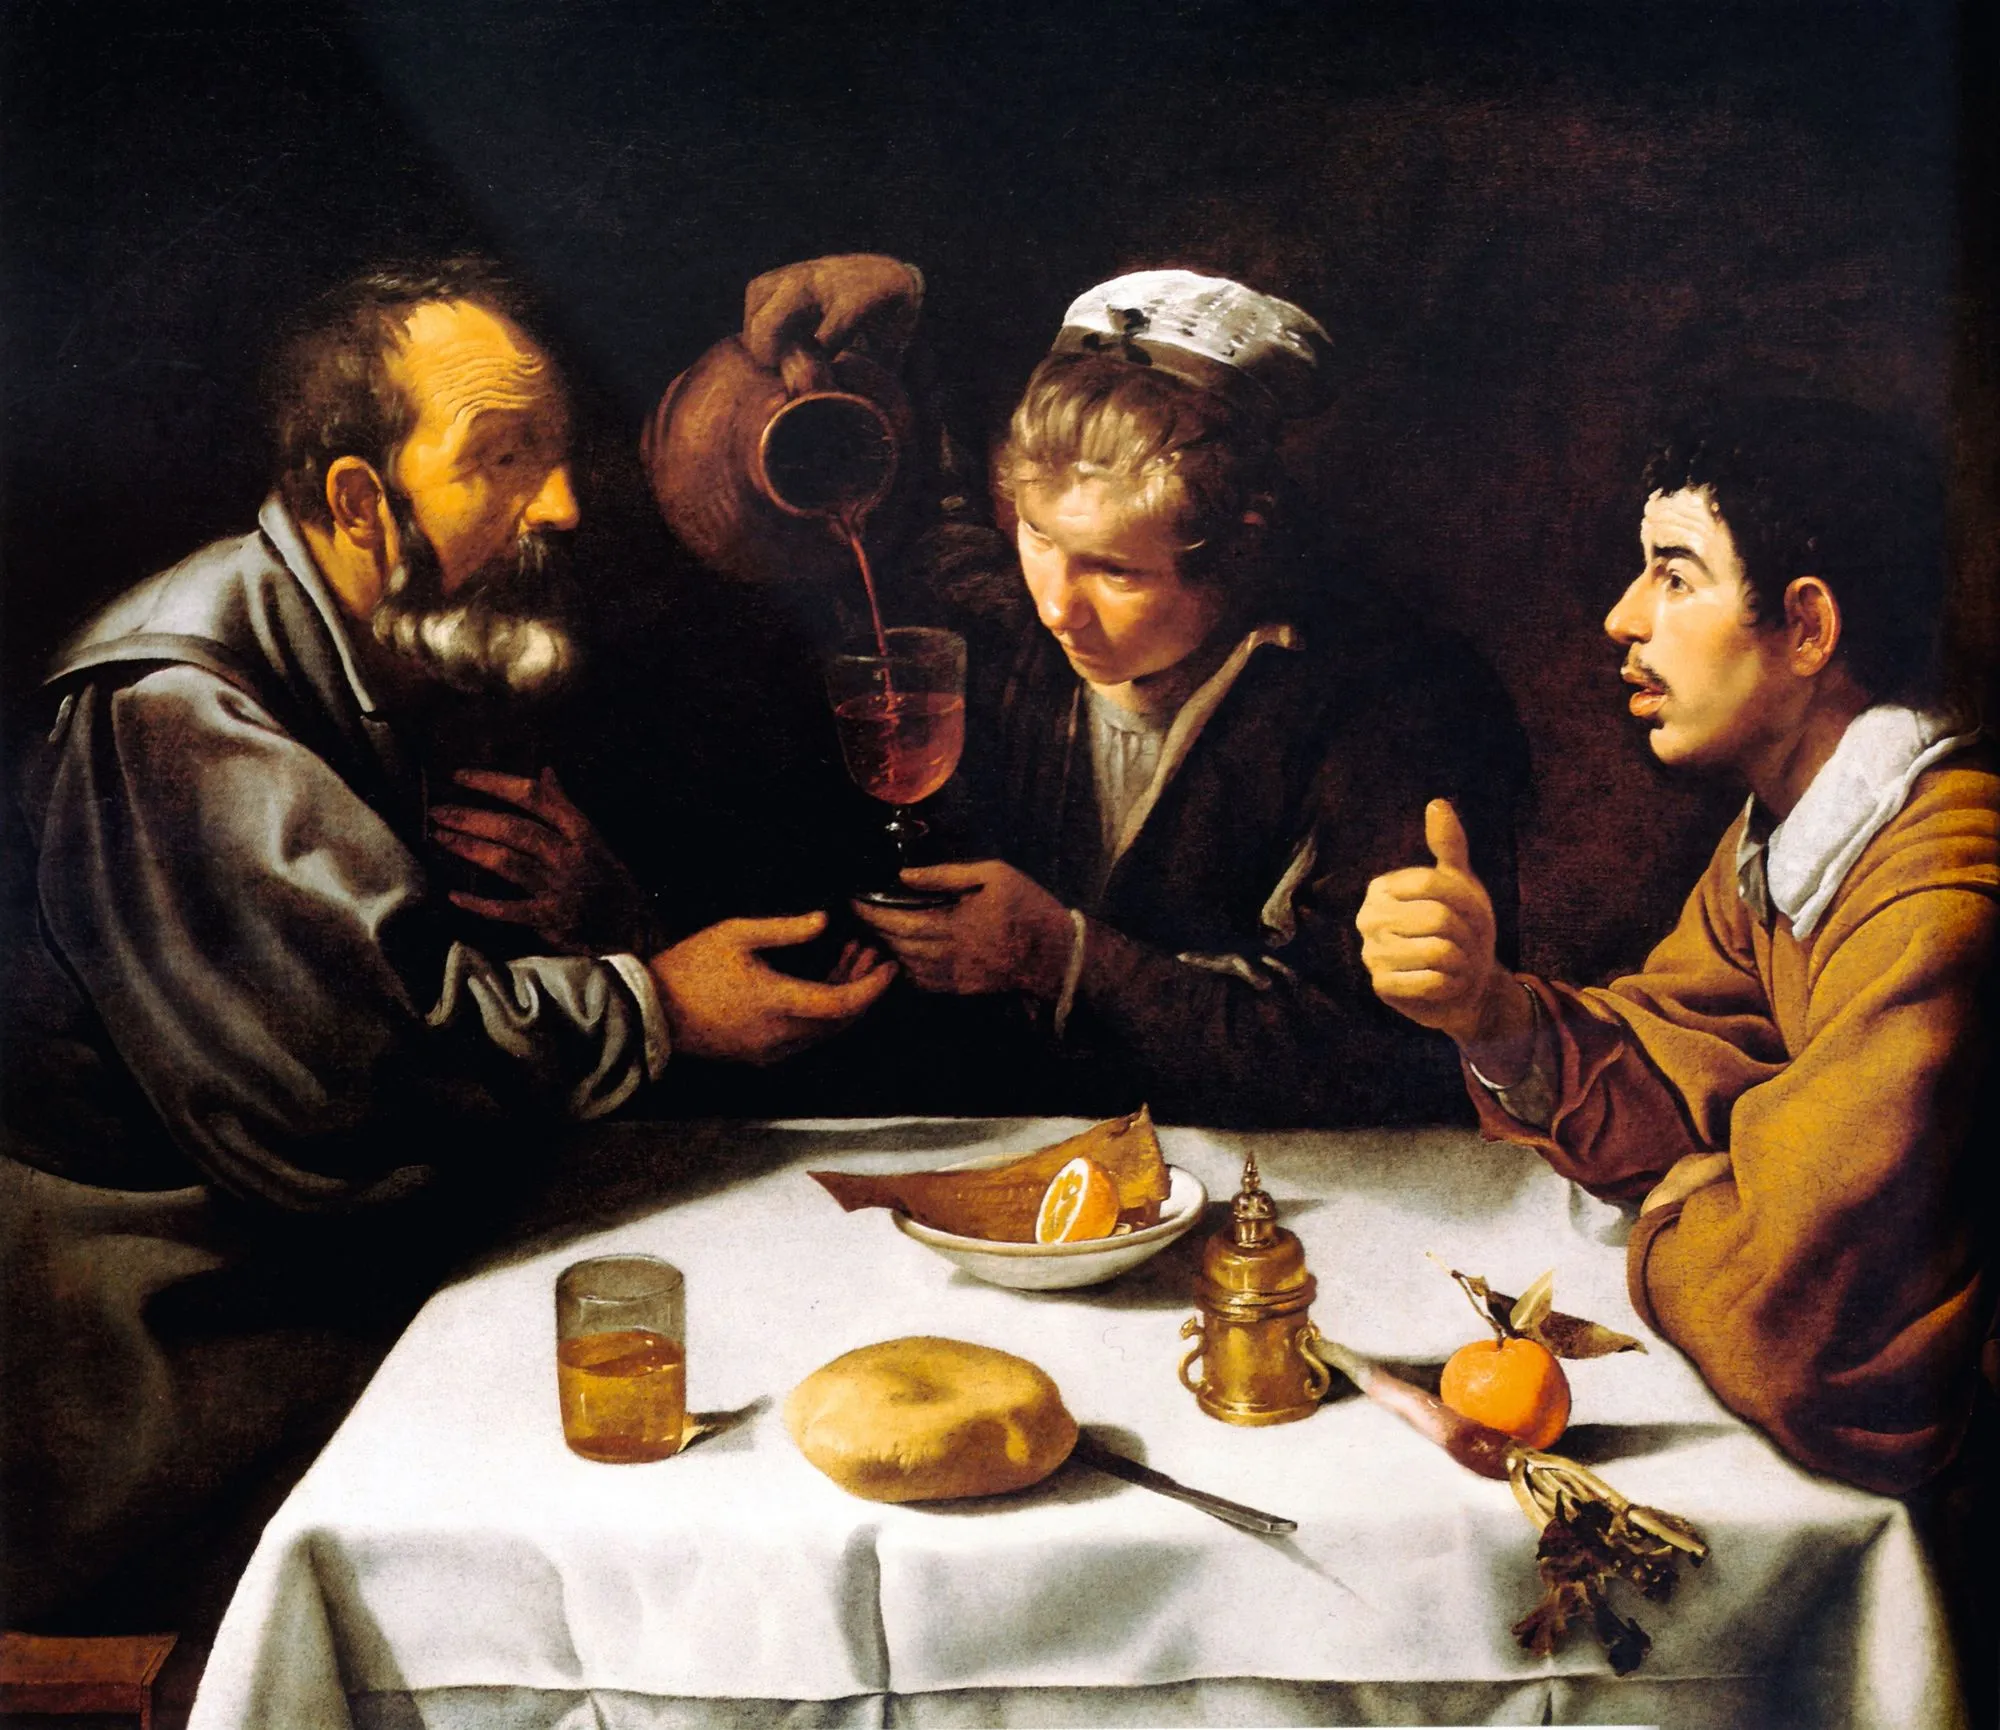 Diego Velázquez, El almuerzo, 1617.